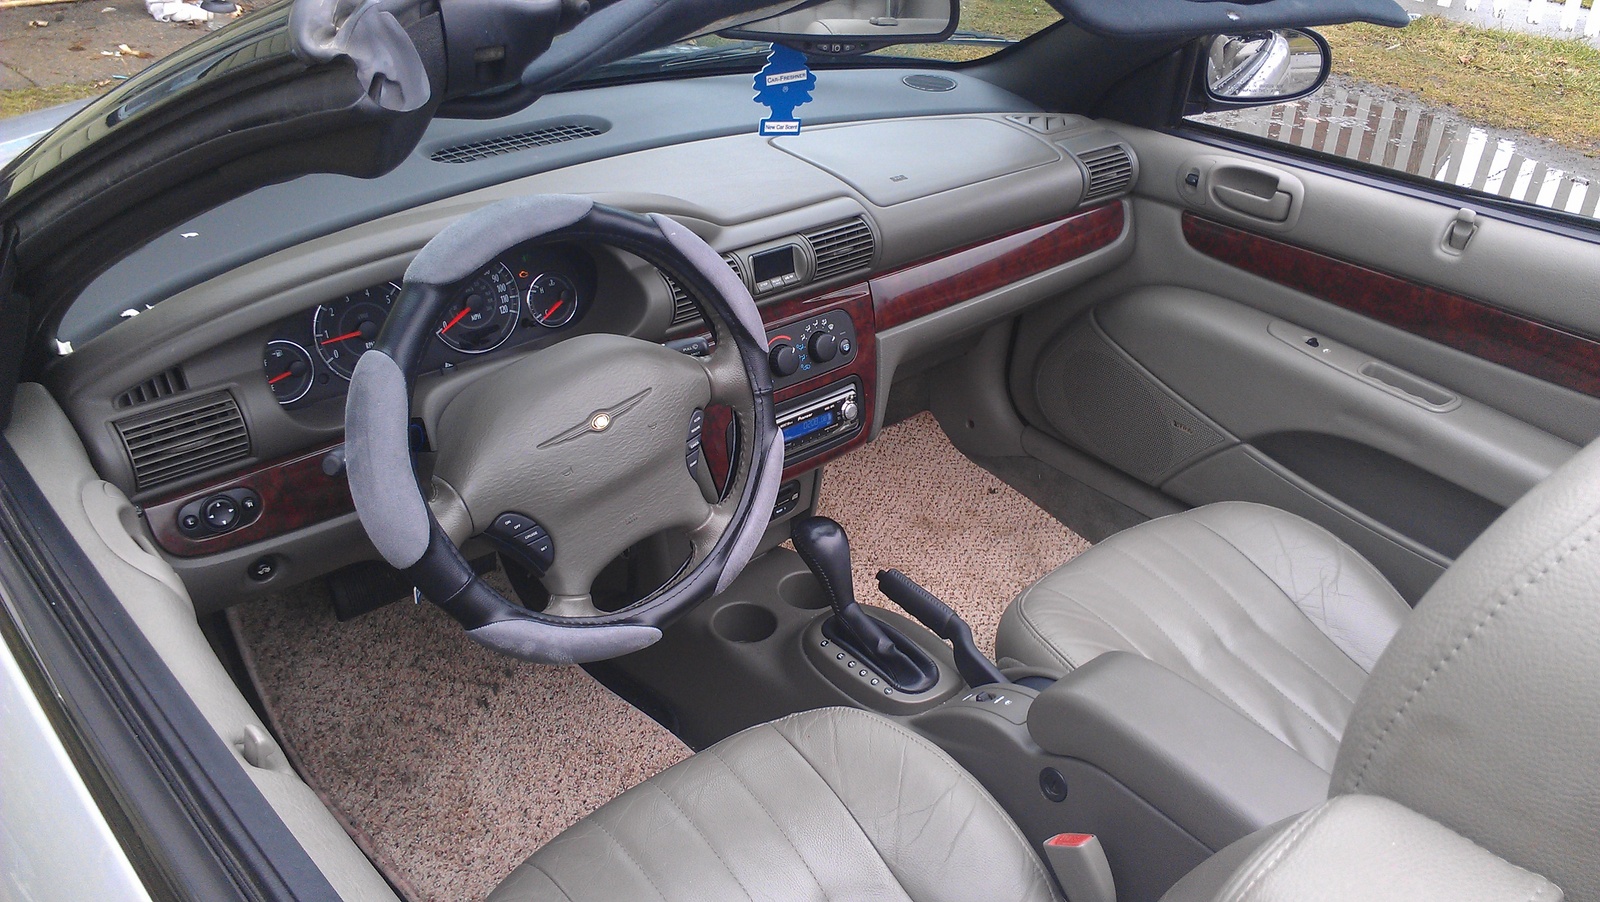 2001 Chrysler sebring convertible engine #4